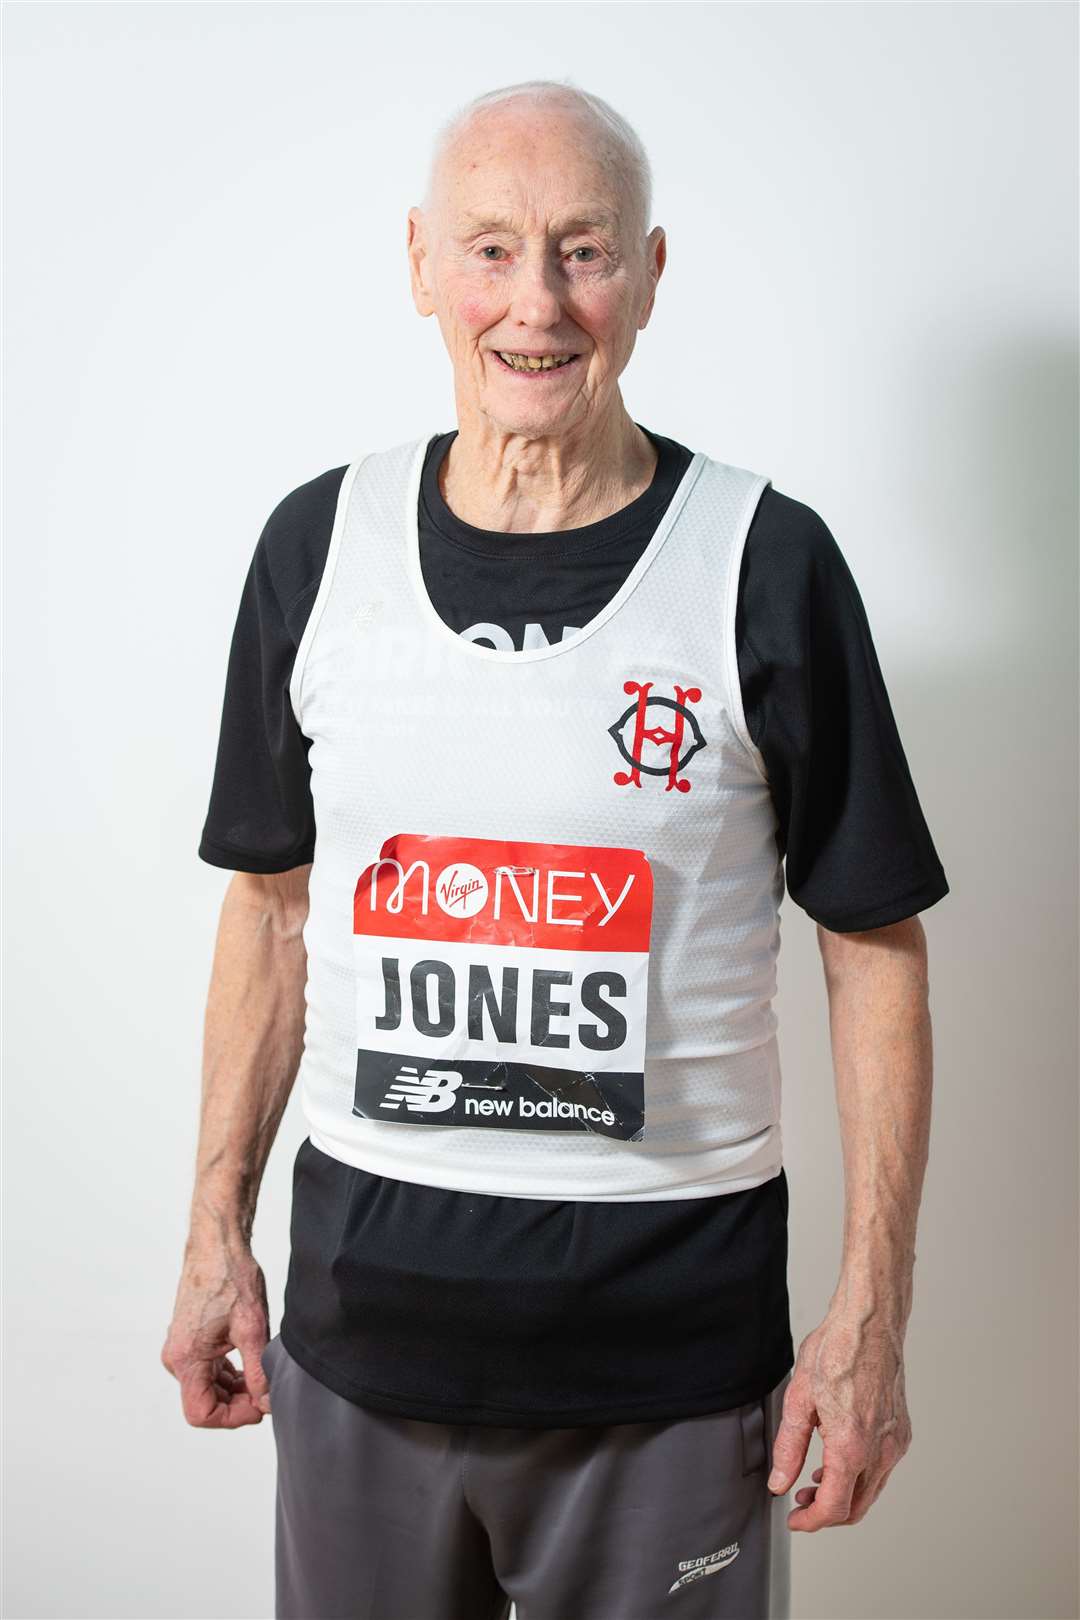 Ken Jones, 87, plans to run again next year (Dominic Lipinski/PA)